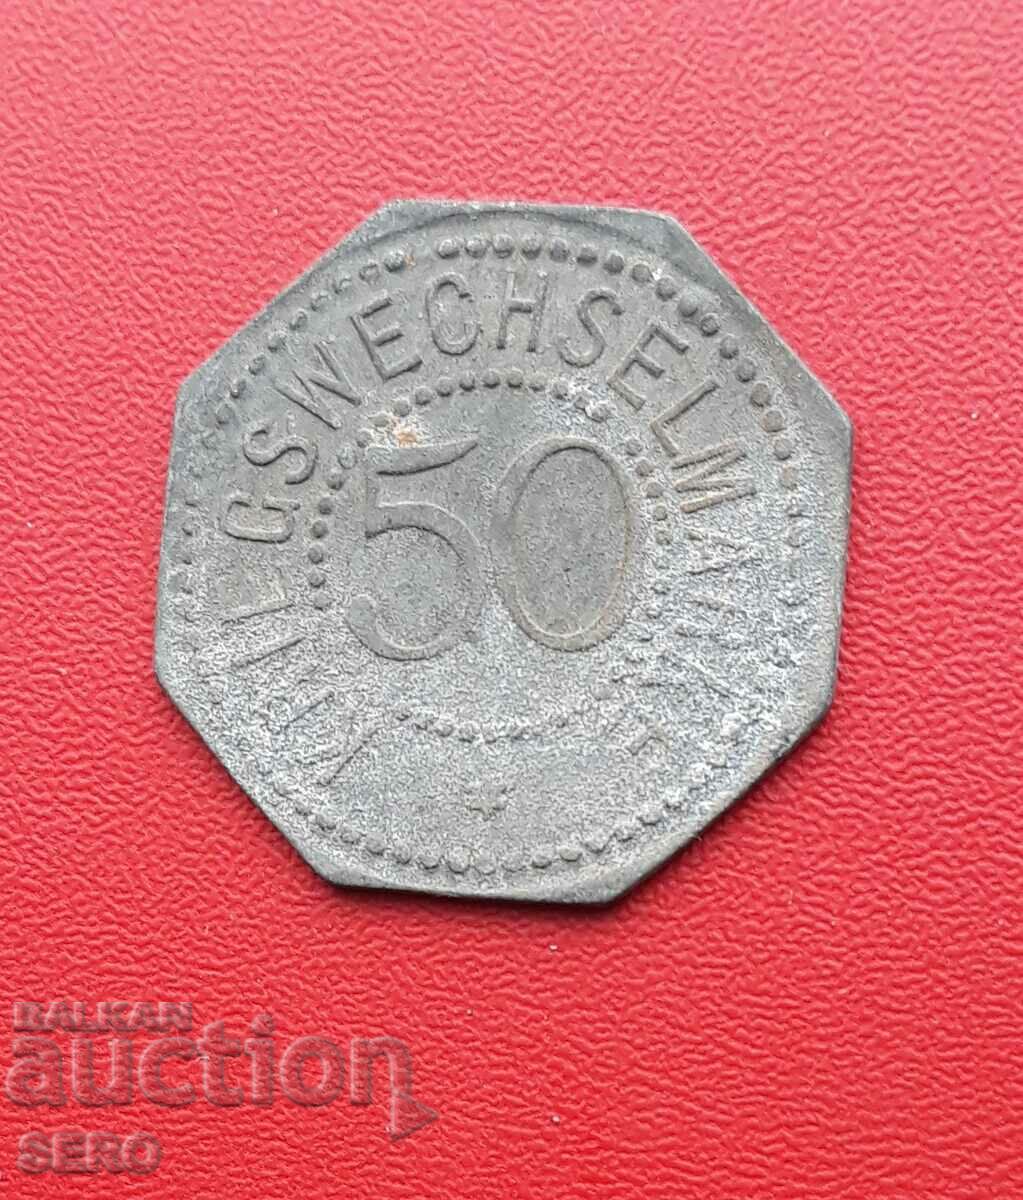 Germany-Bavaria-Bergedorf-50 pfennig 1917